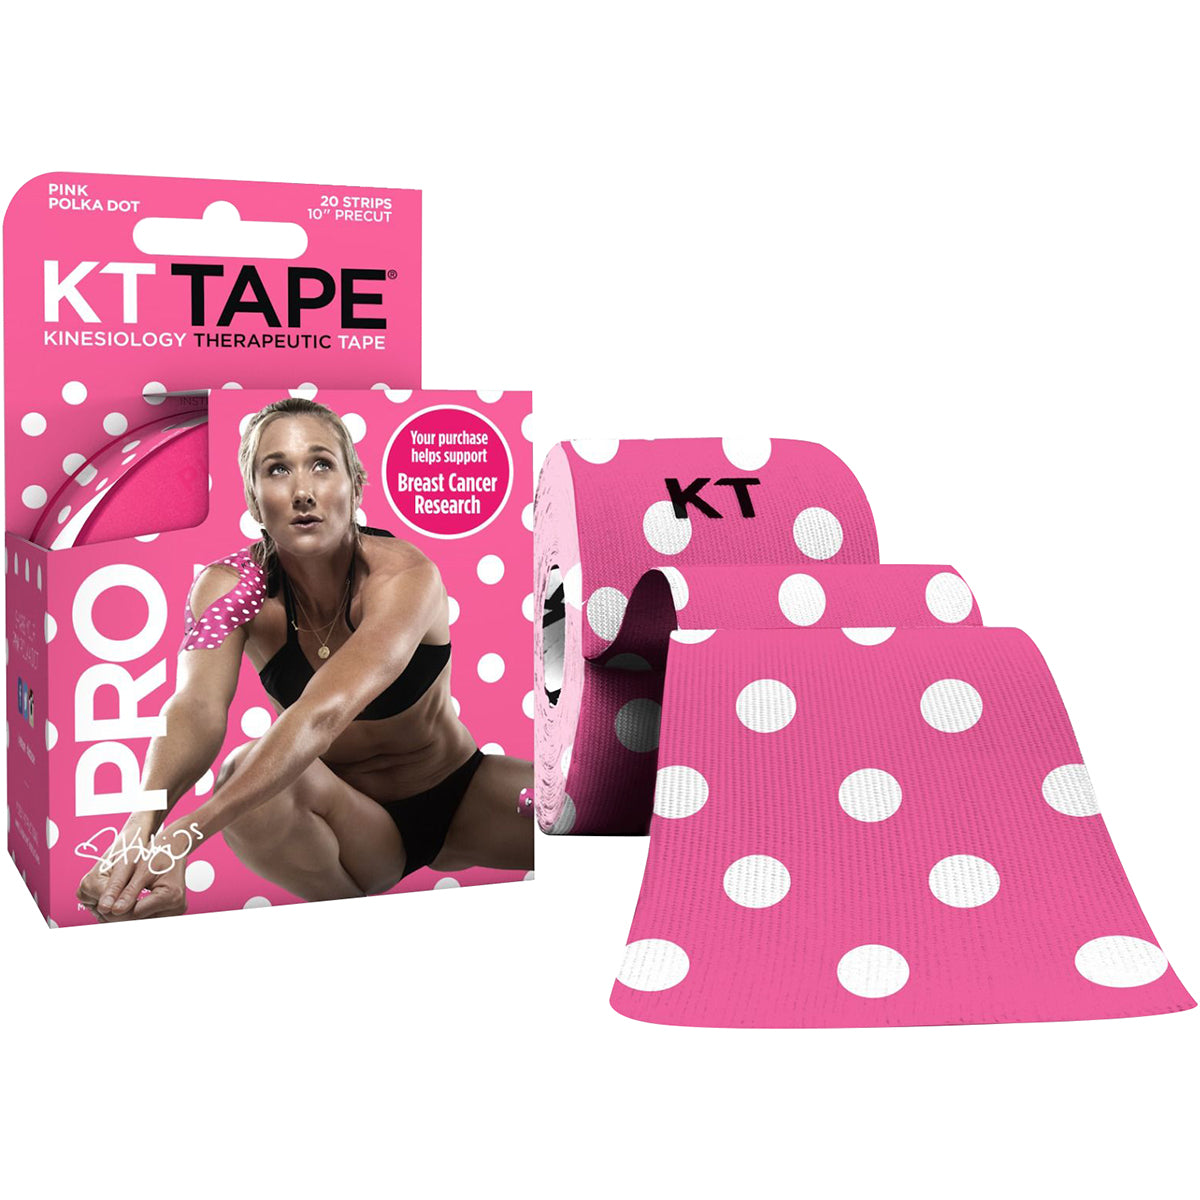 KT Tape Pro 10" Precut Kinesiology Elastic Sports Roll - 20 Strips - Polka Dots KT Tape